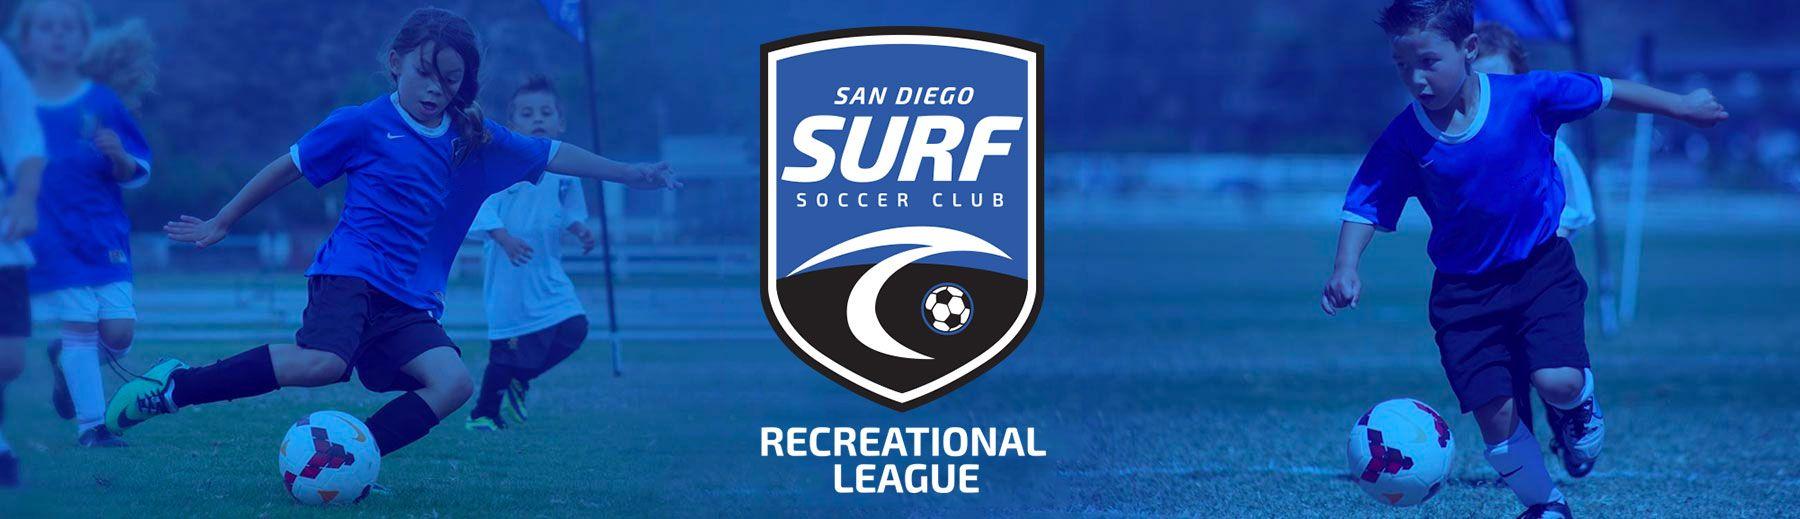 Surf Soccer Logo - Surf Recreational League – San Diego Surf Soccer Club